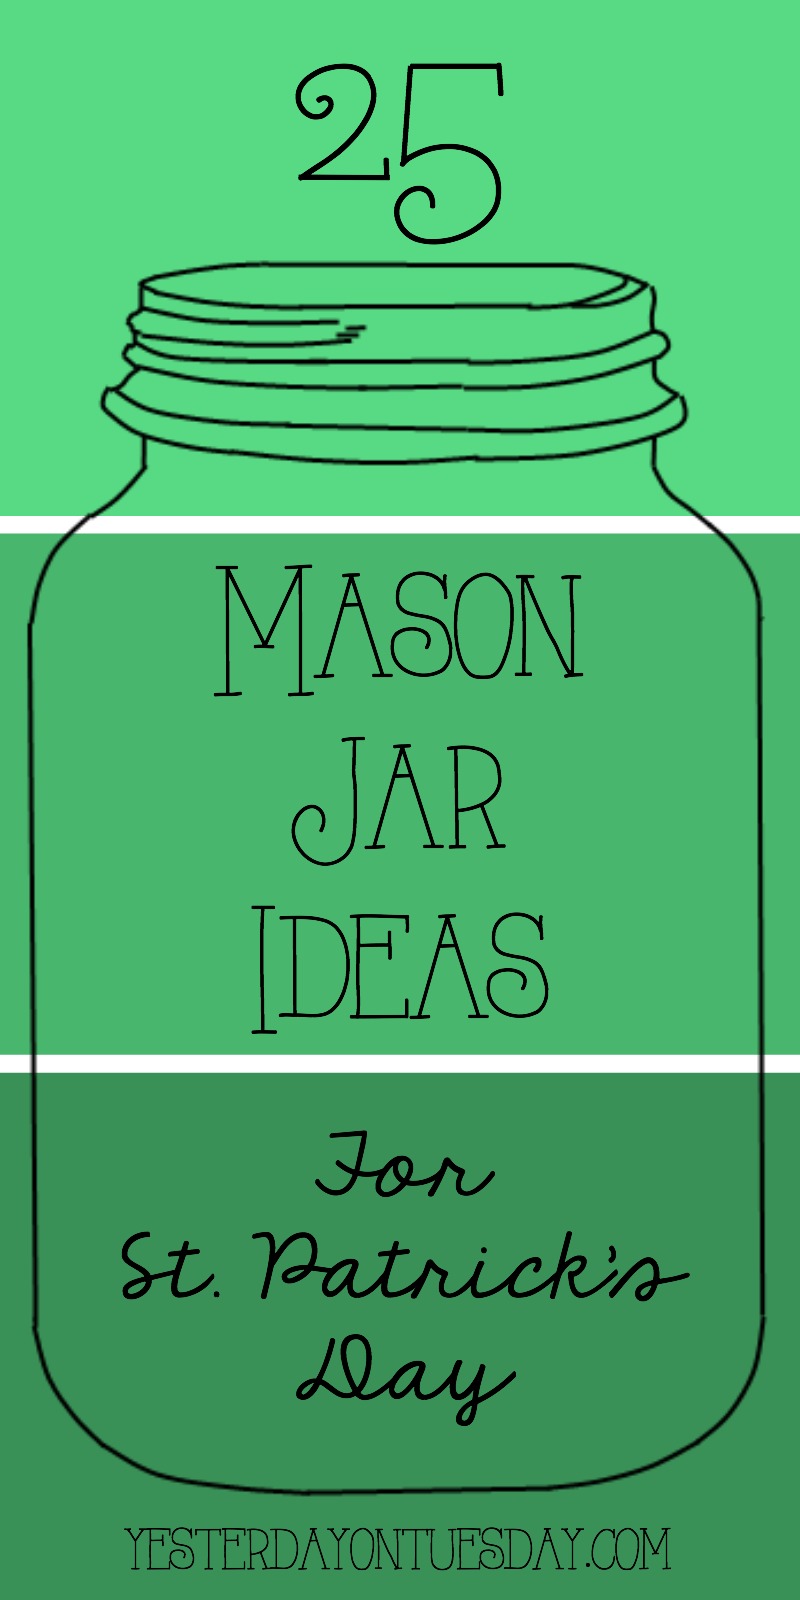 25 Mason Jar Ideas for St. Patrick’s Day